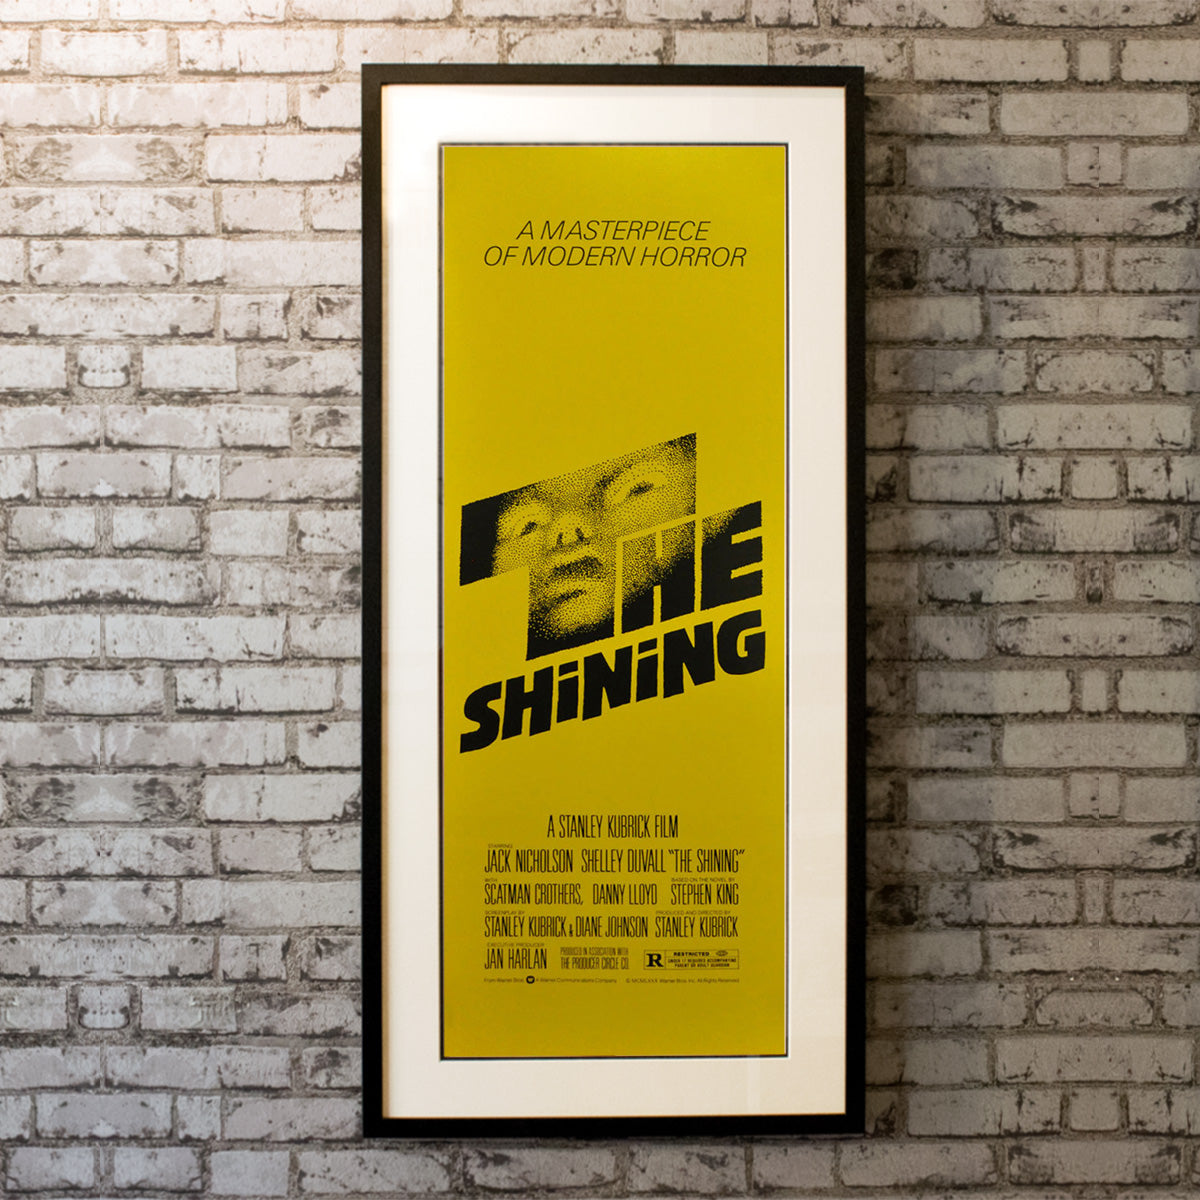 Original Movie Poster of Shining, The (1980)